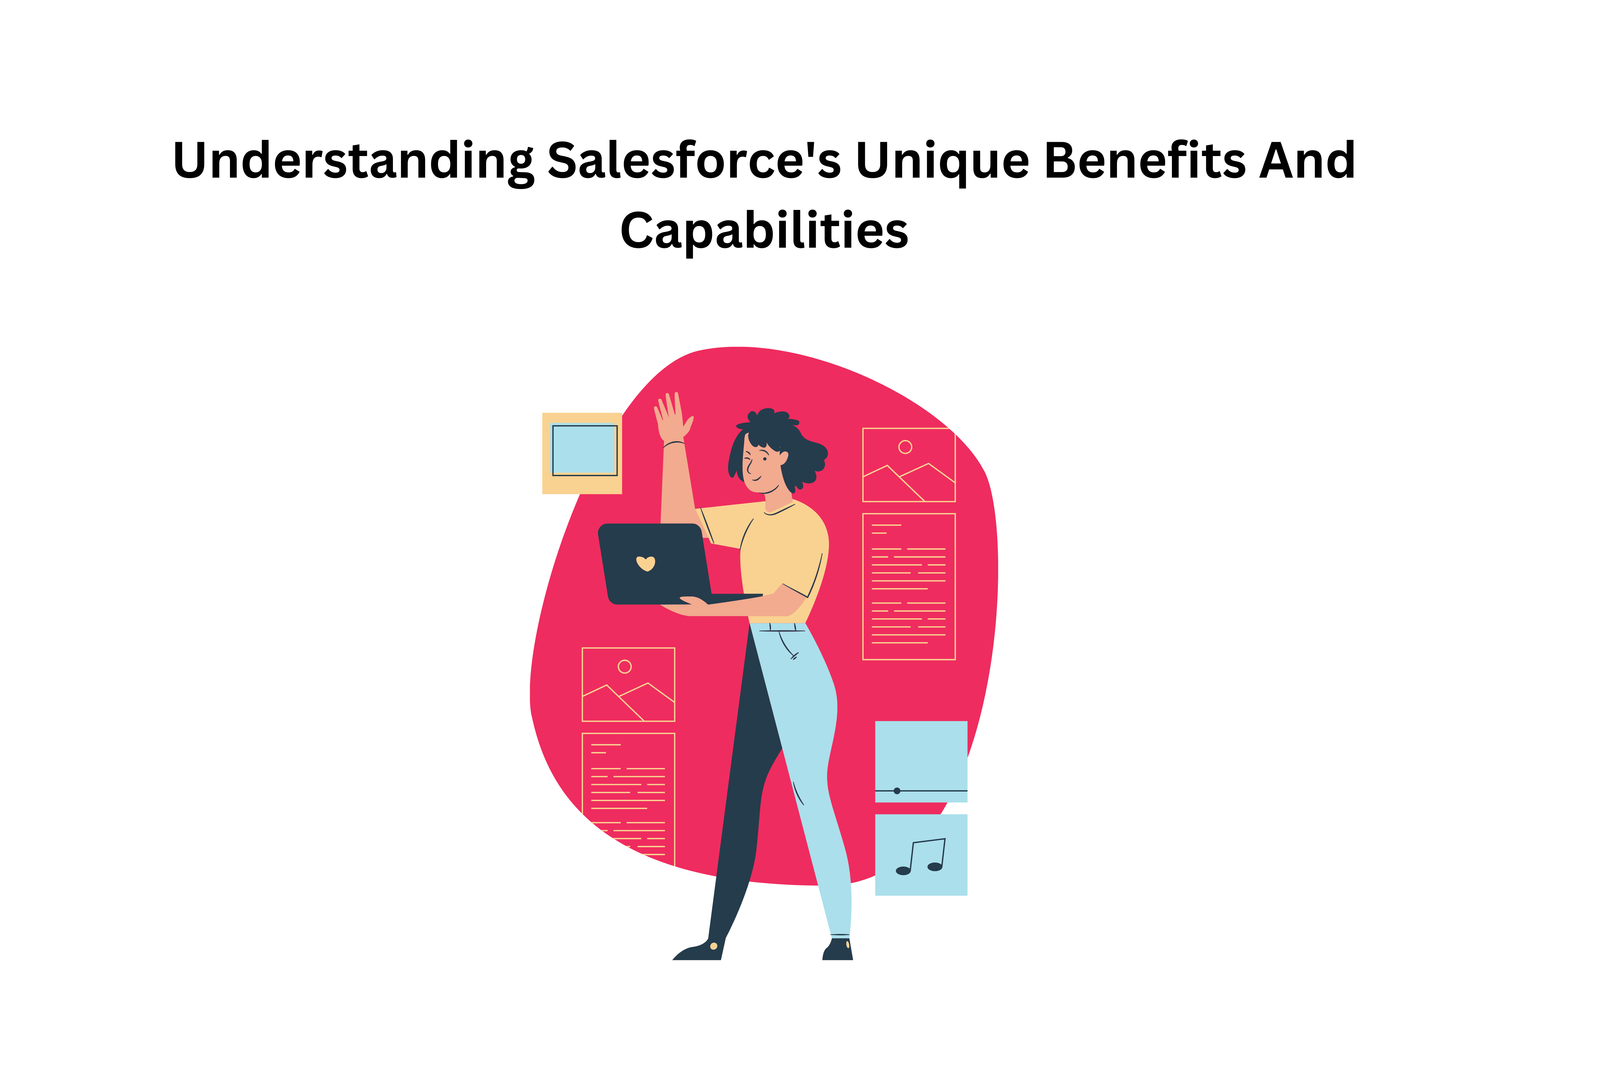 Salesforce’s Unique Benefits And Capabilities